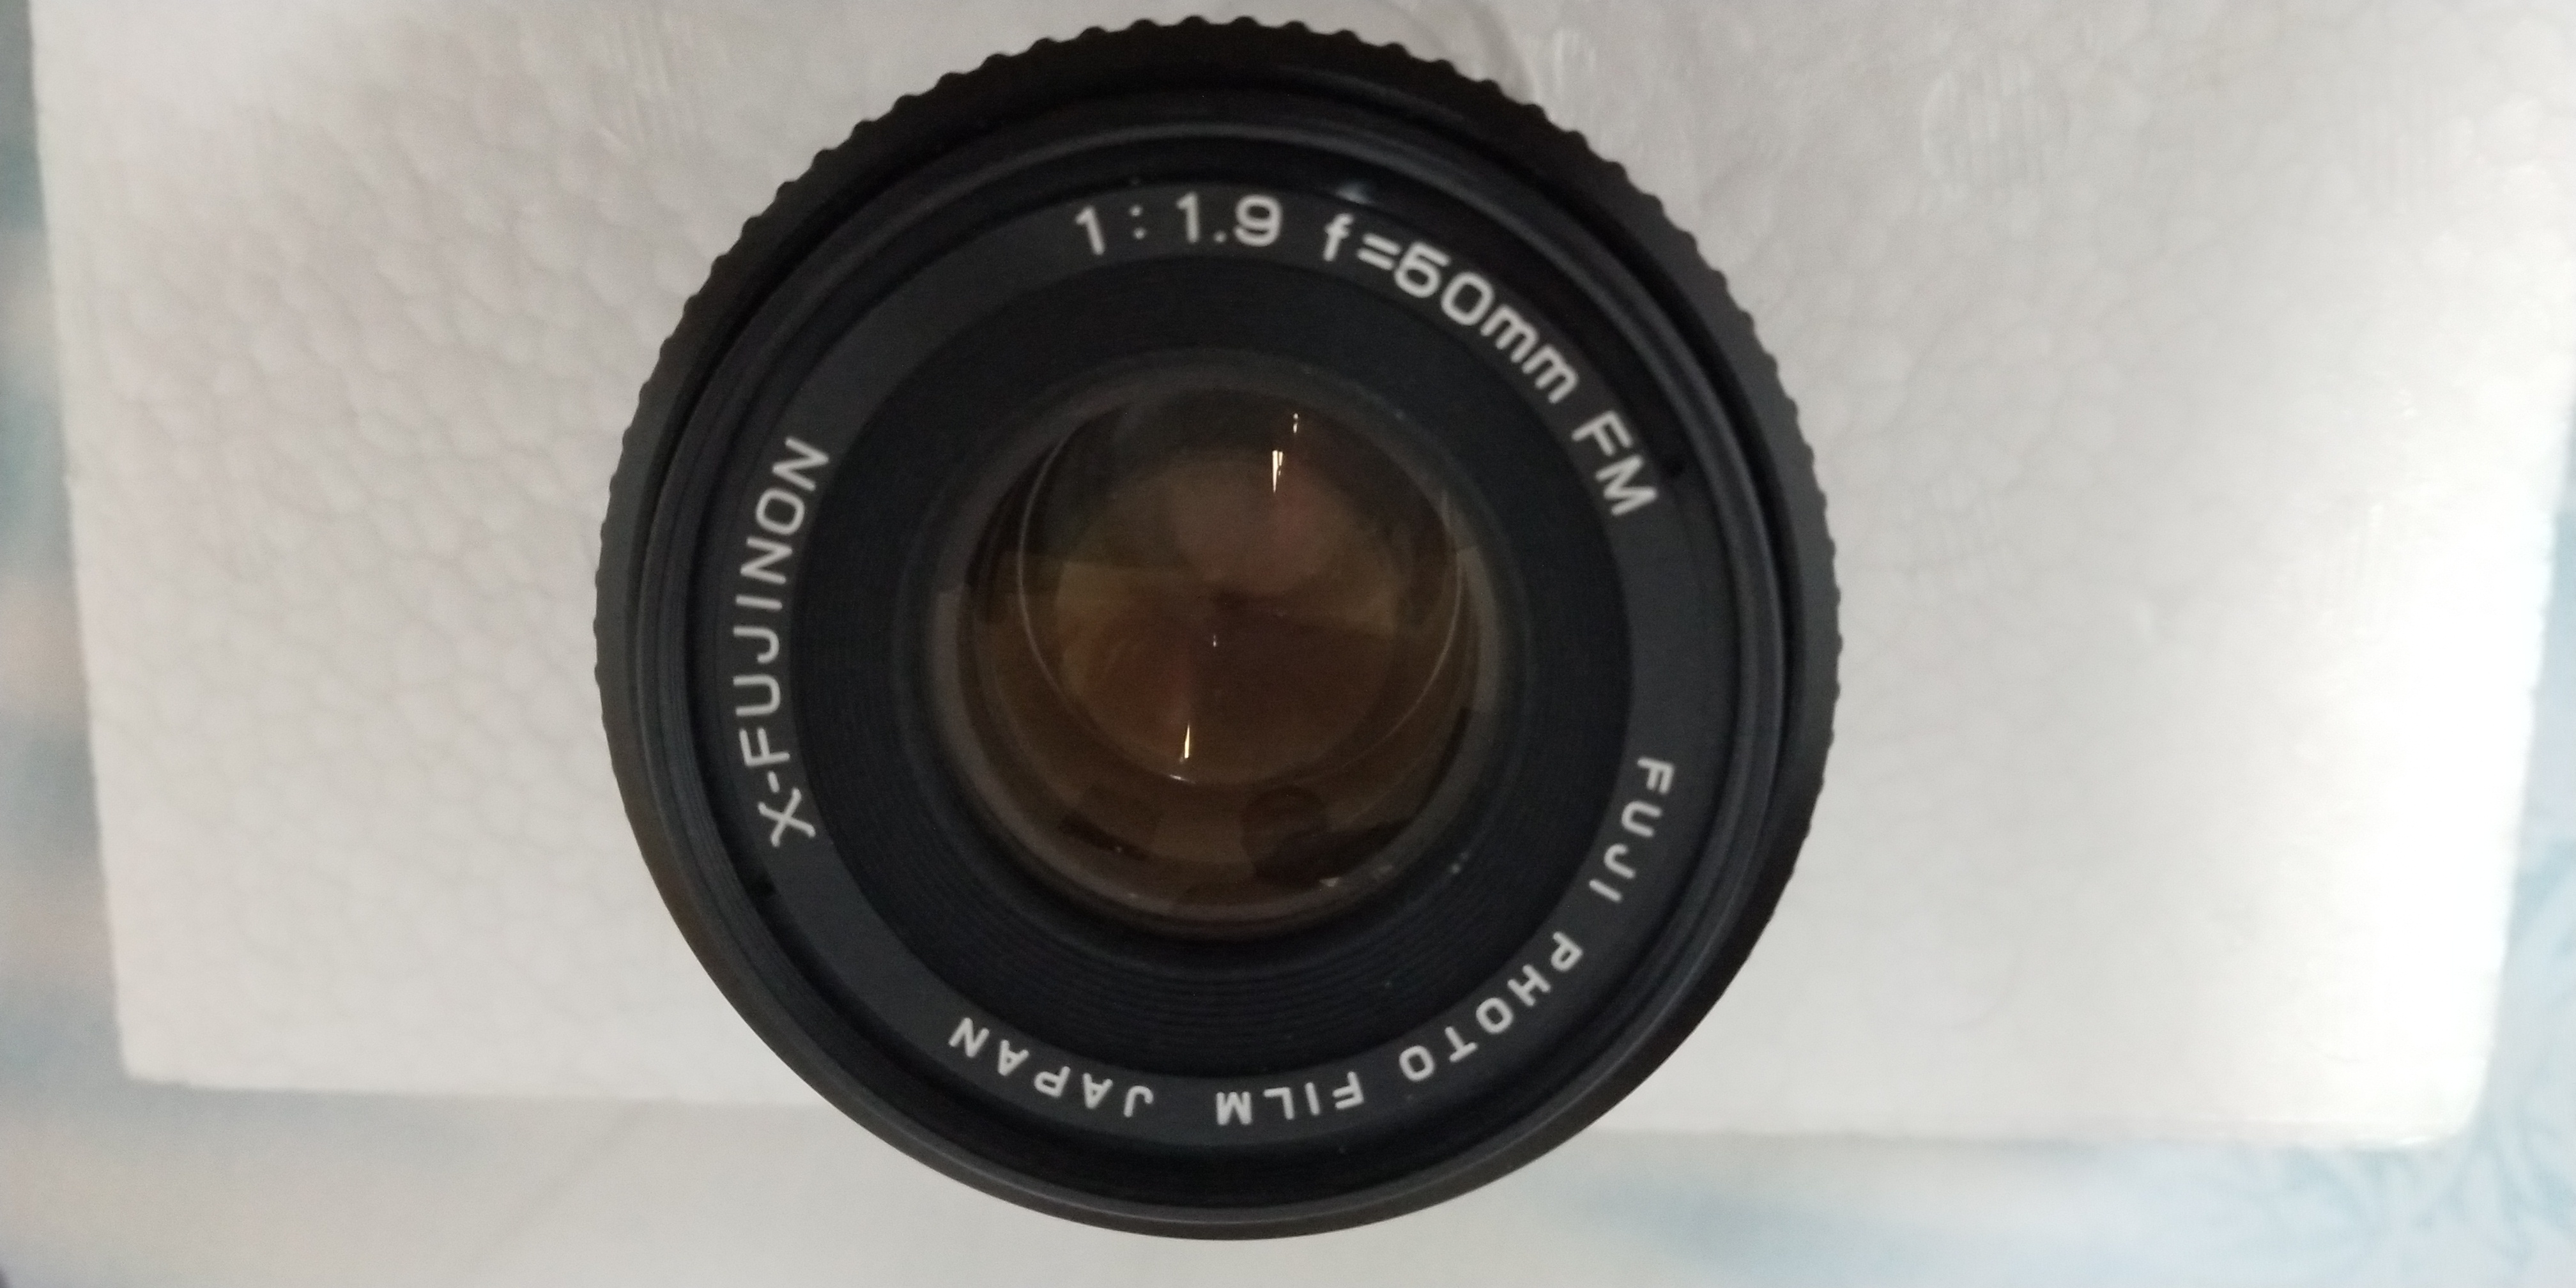  Fuji 135 camera 50MM1.9 standard lens